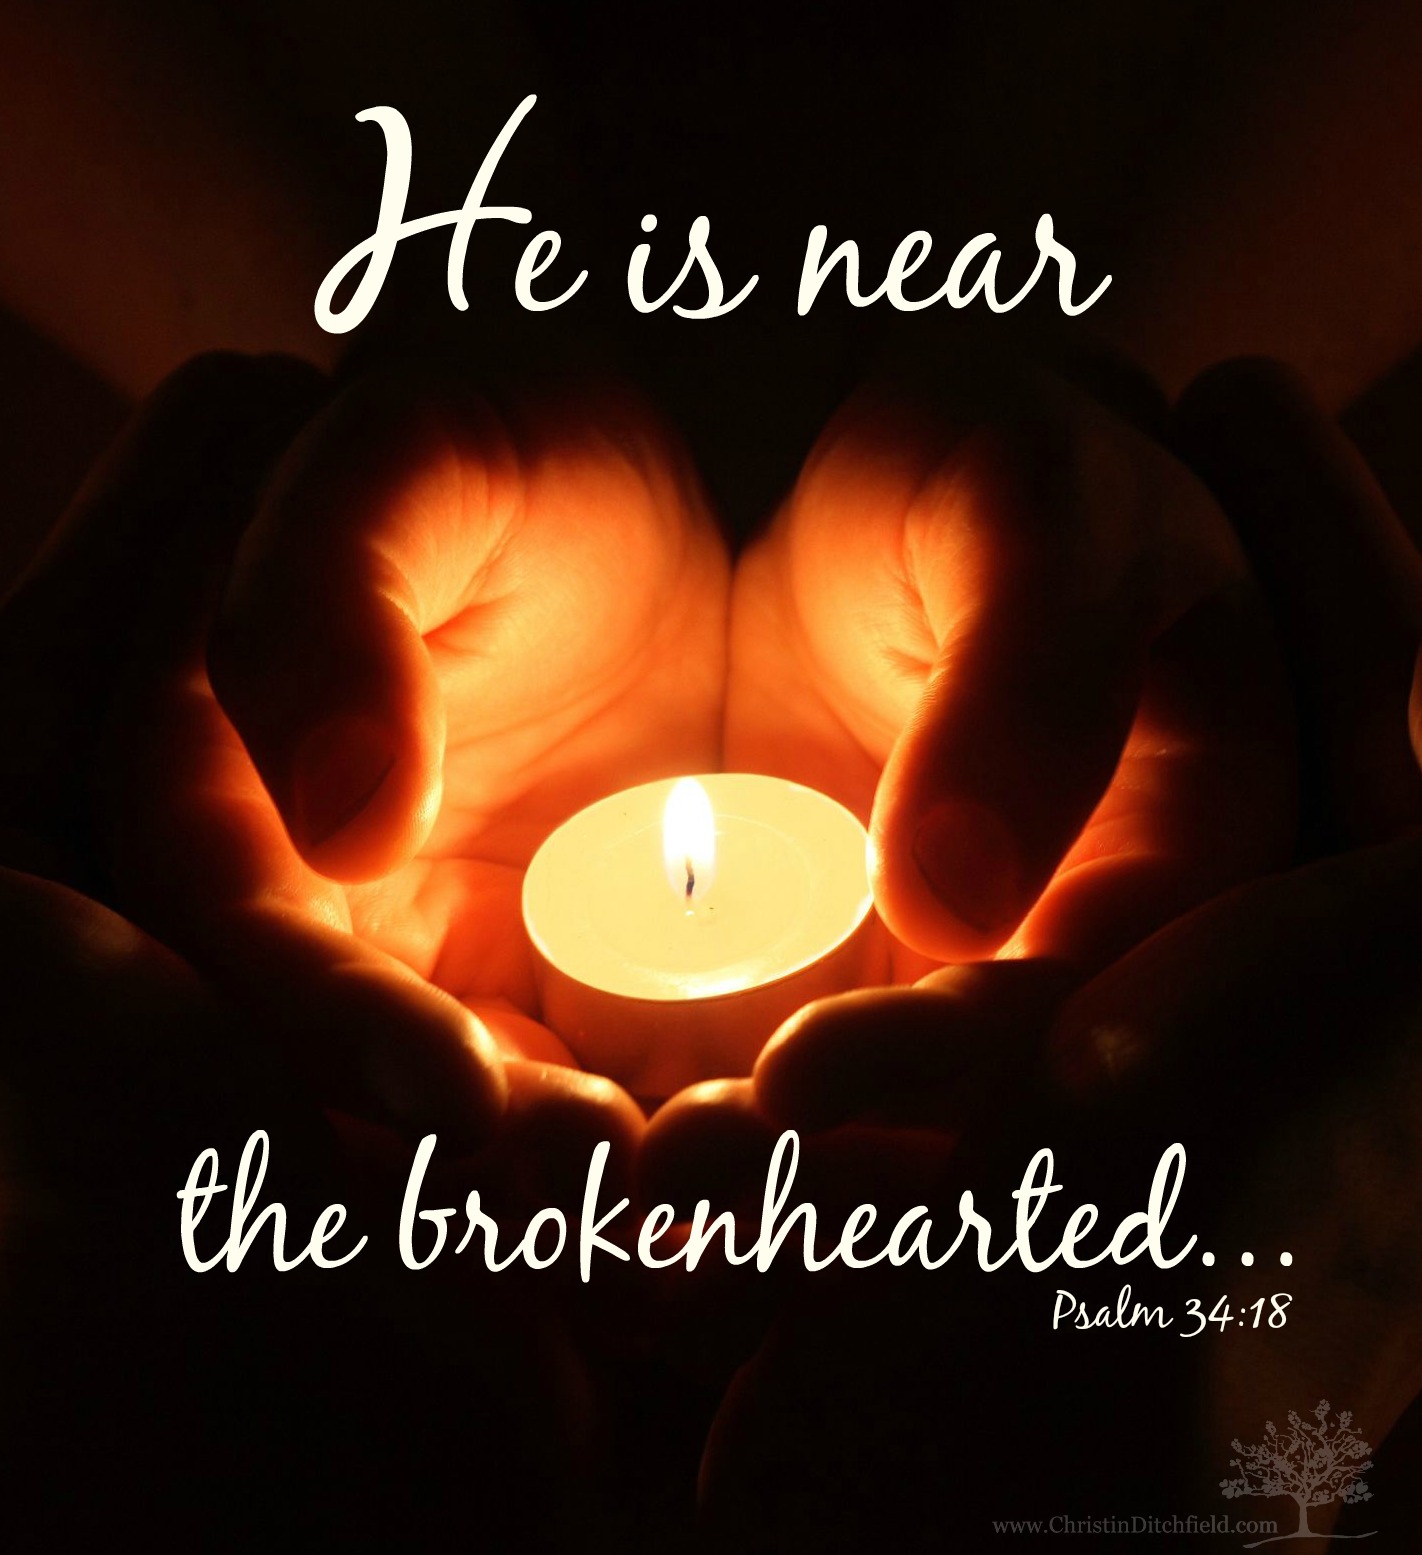 Near the Brokenhearted Psalm 34:18